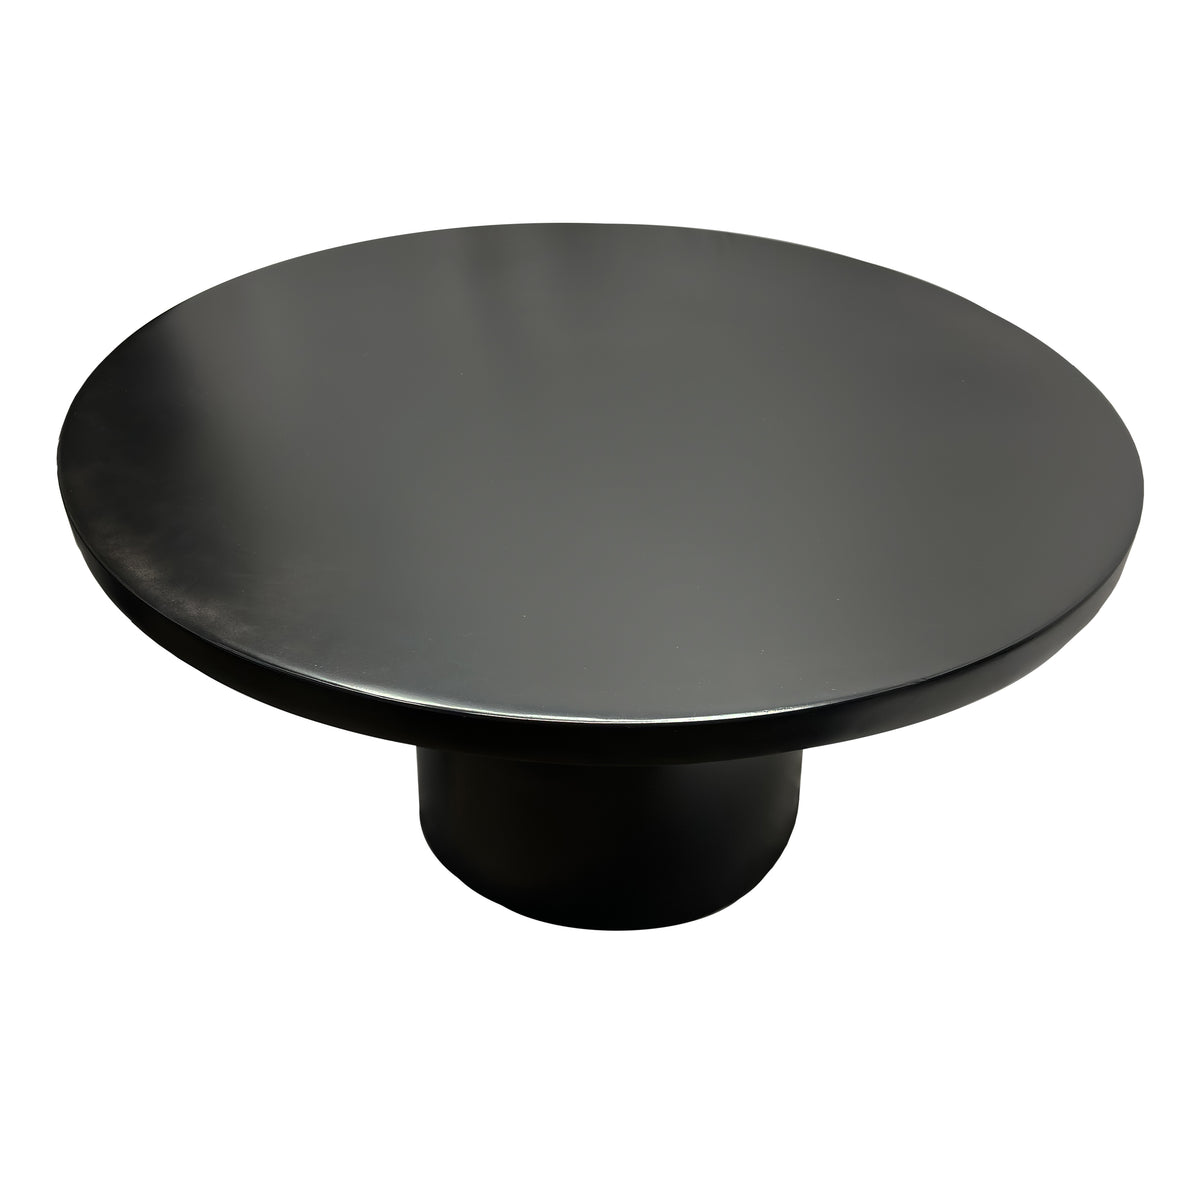 Zoe 30 Inch Round Coffee Table with Pedestal Base, Sleek Modern Silhouette, Matte Black Powder Coated Metal- UPT-295605